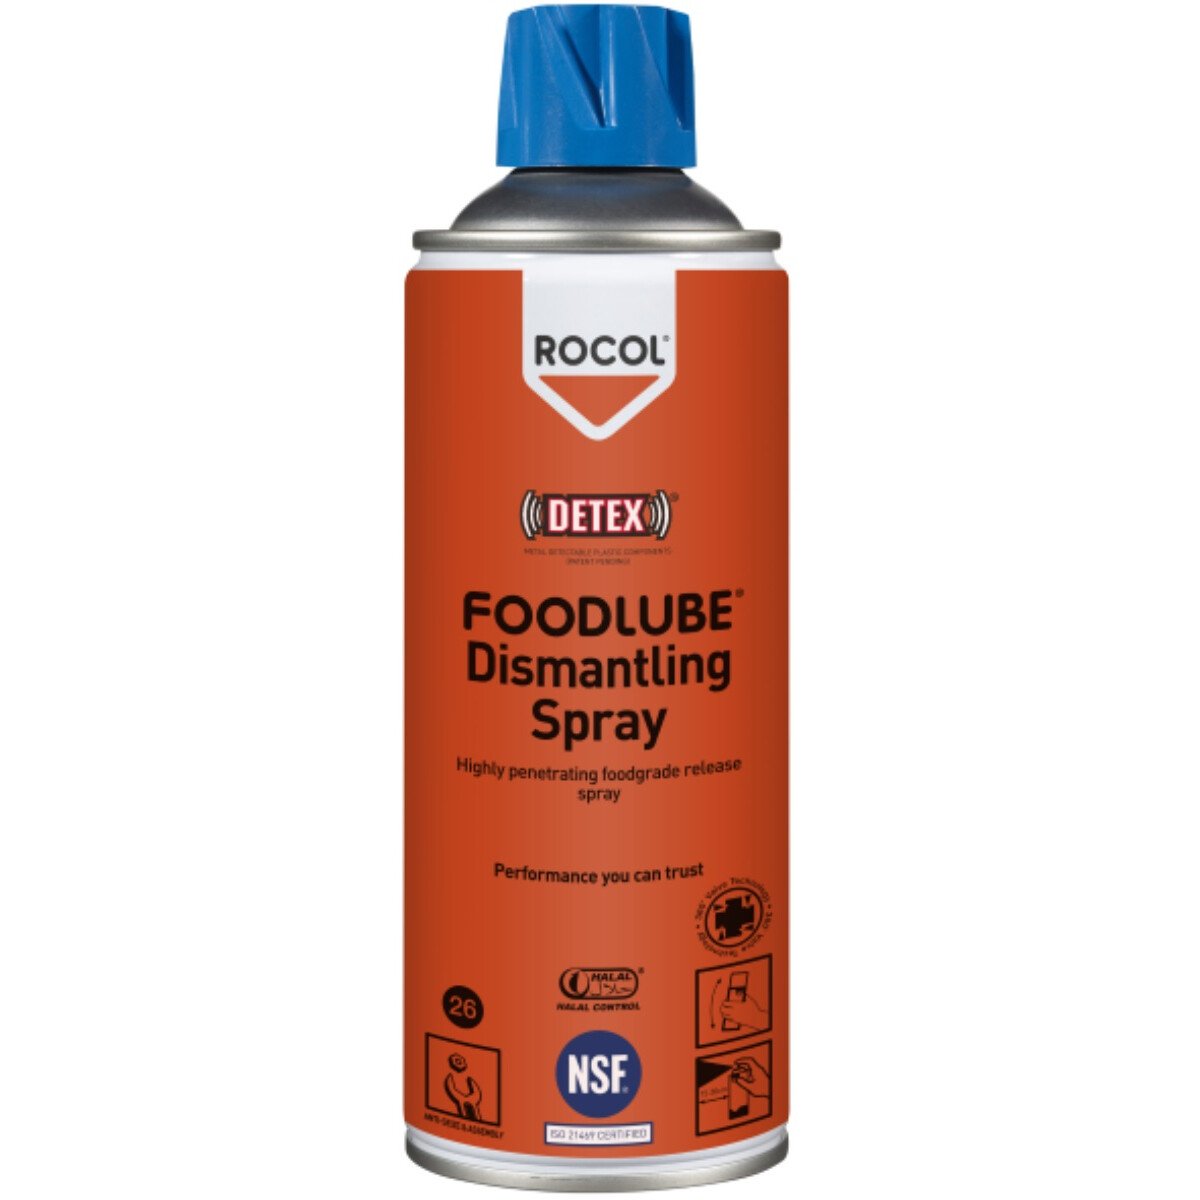 Rocol 15720 Foodlube Dismantling Spray (NSF Registered) 300ml